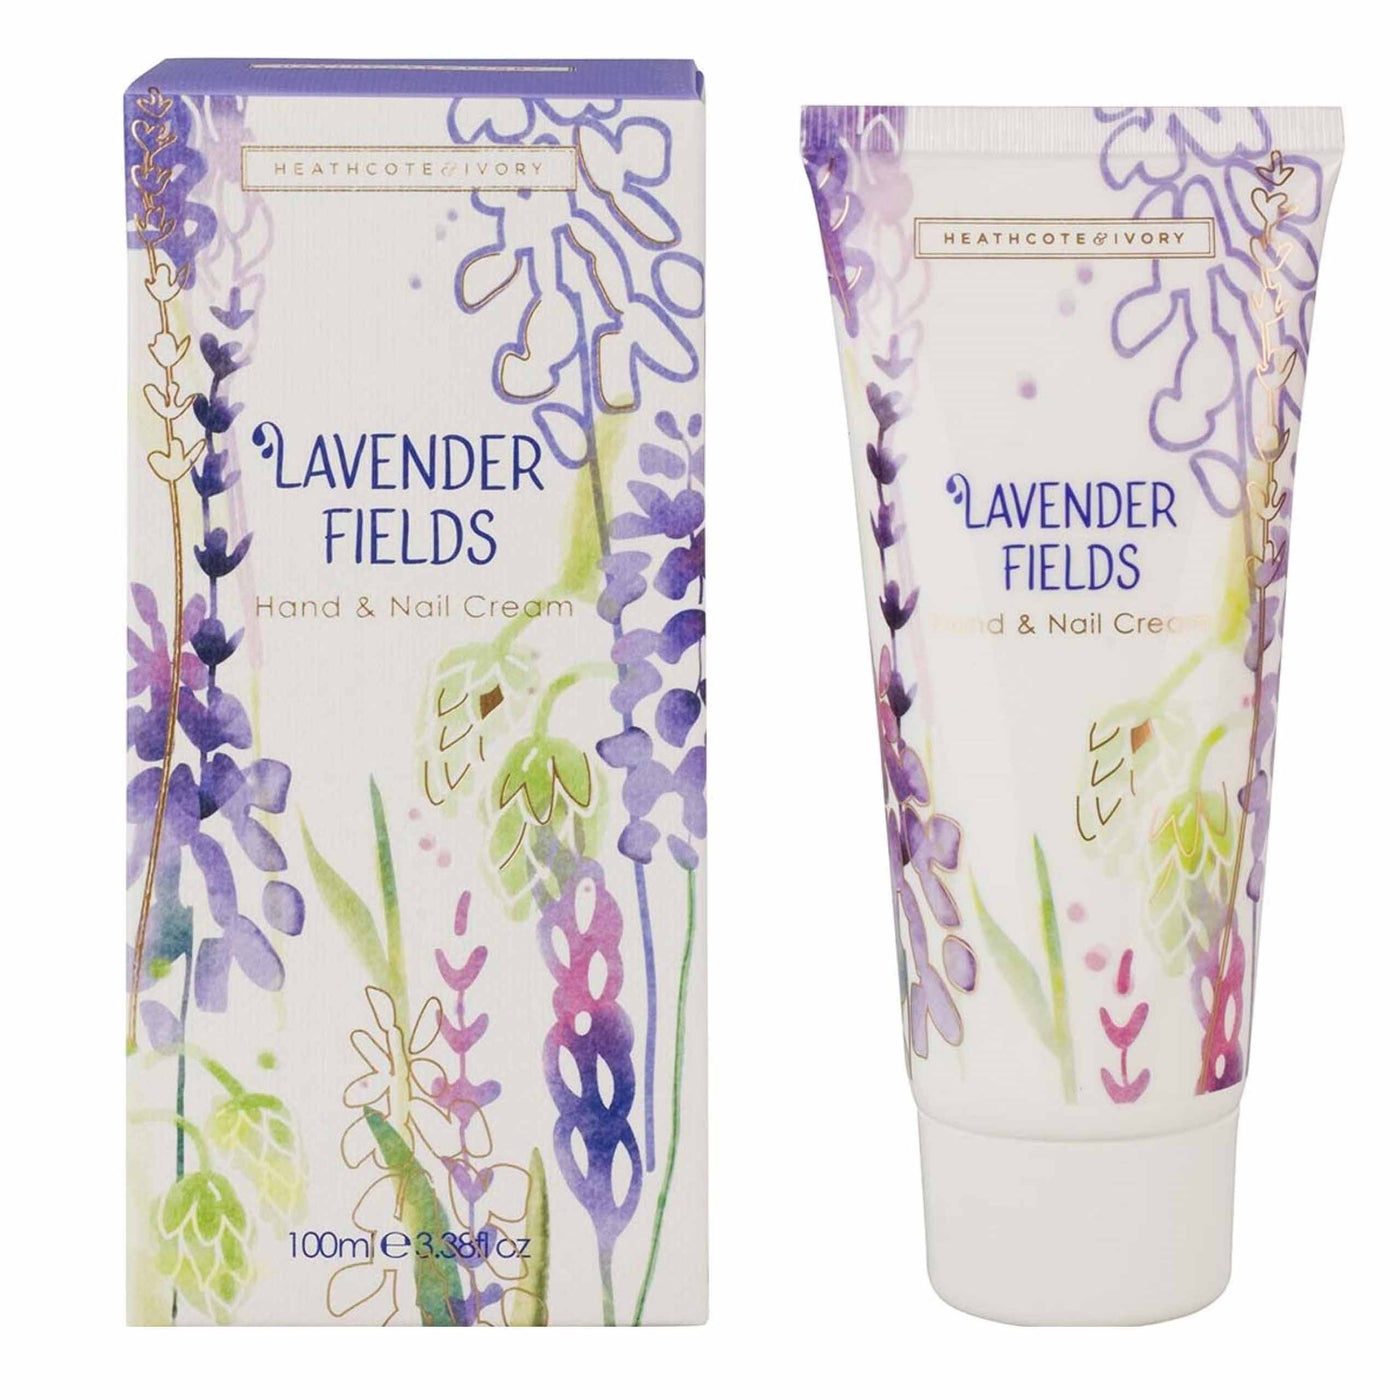 Lavender Fields Hand & Nail Cream - Heathcote & Ivory